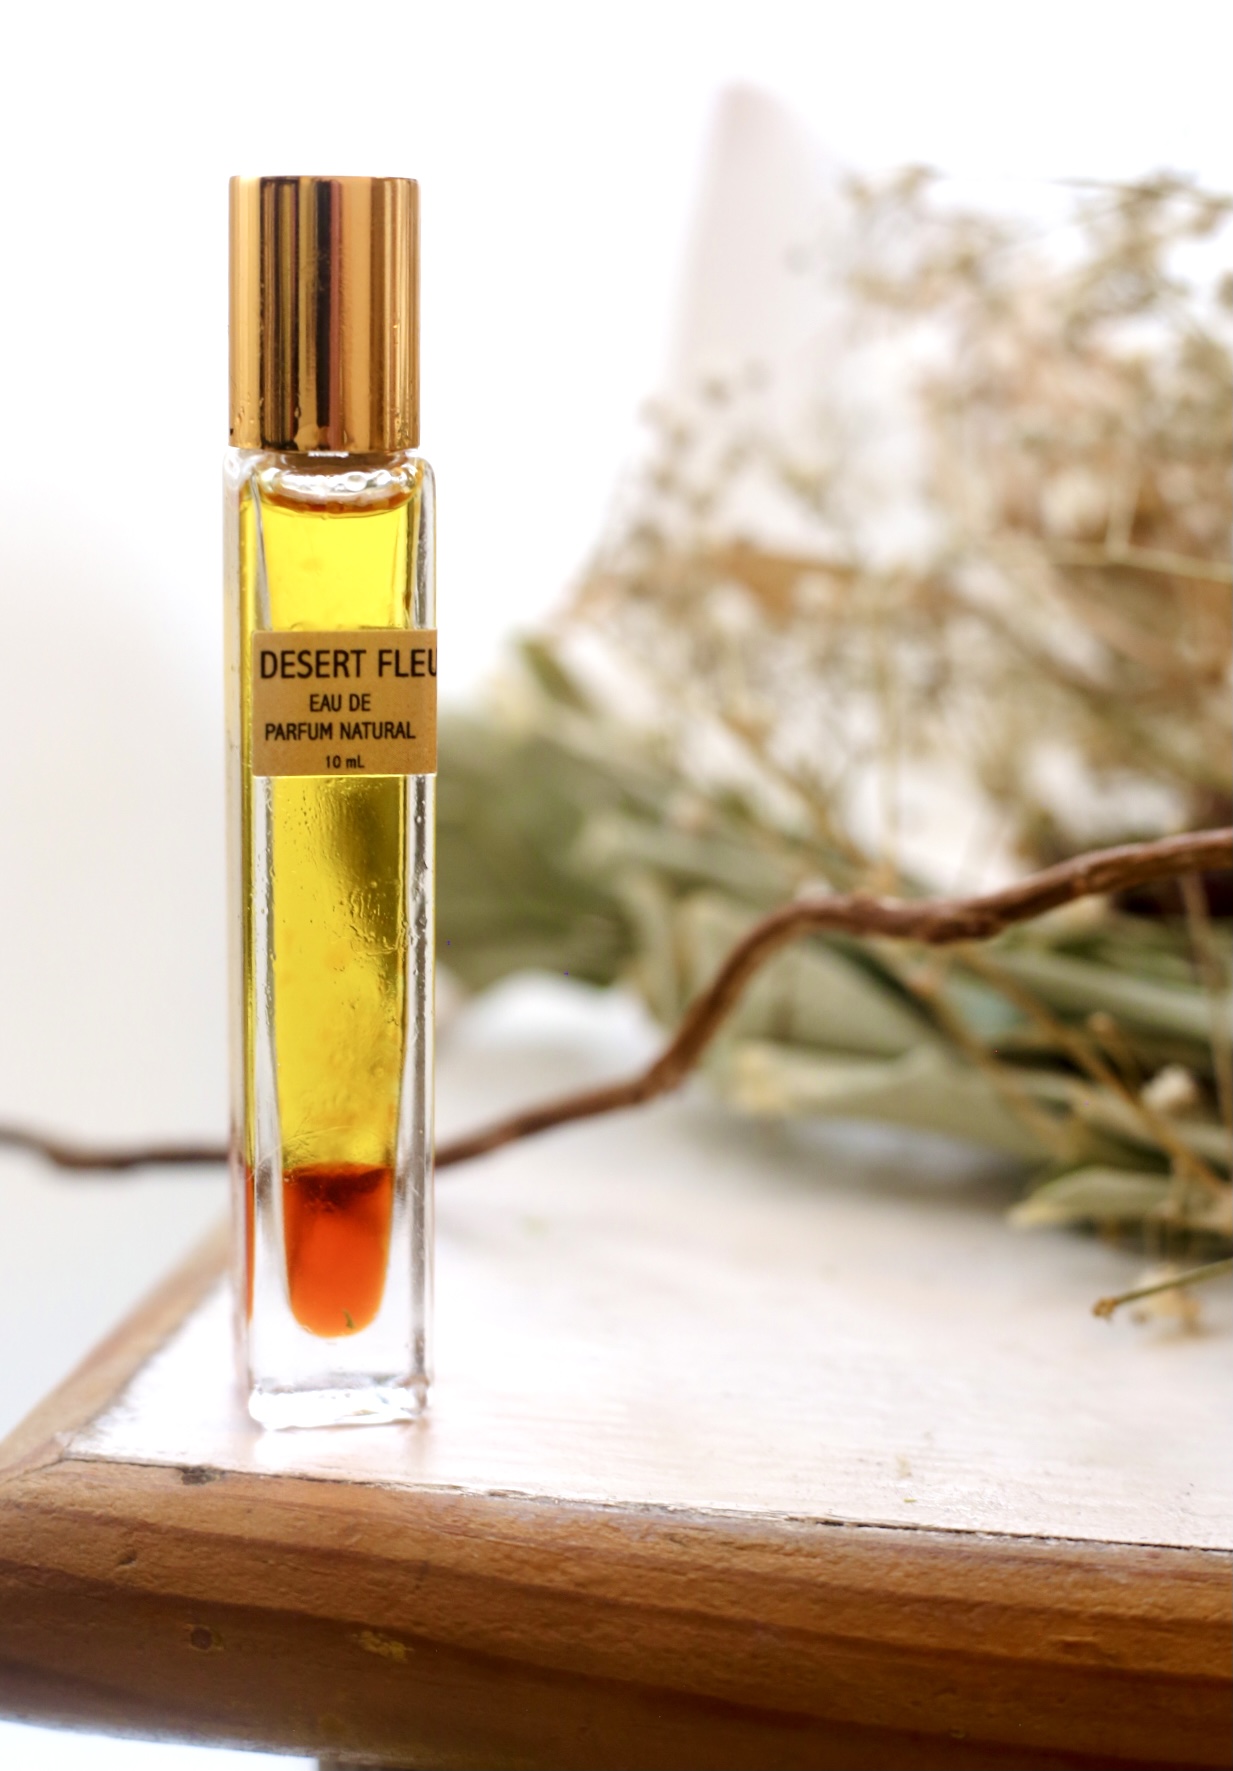 Bohemian Reves Botanical Perfume Review